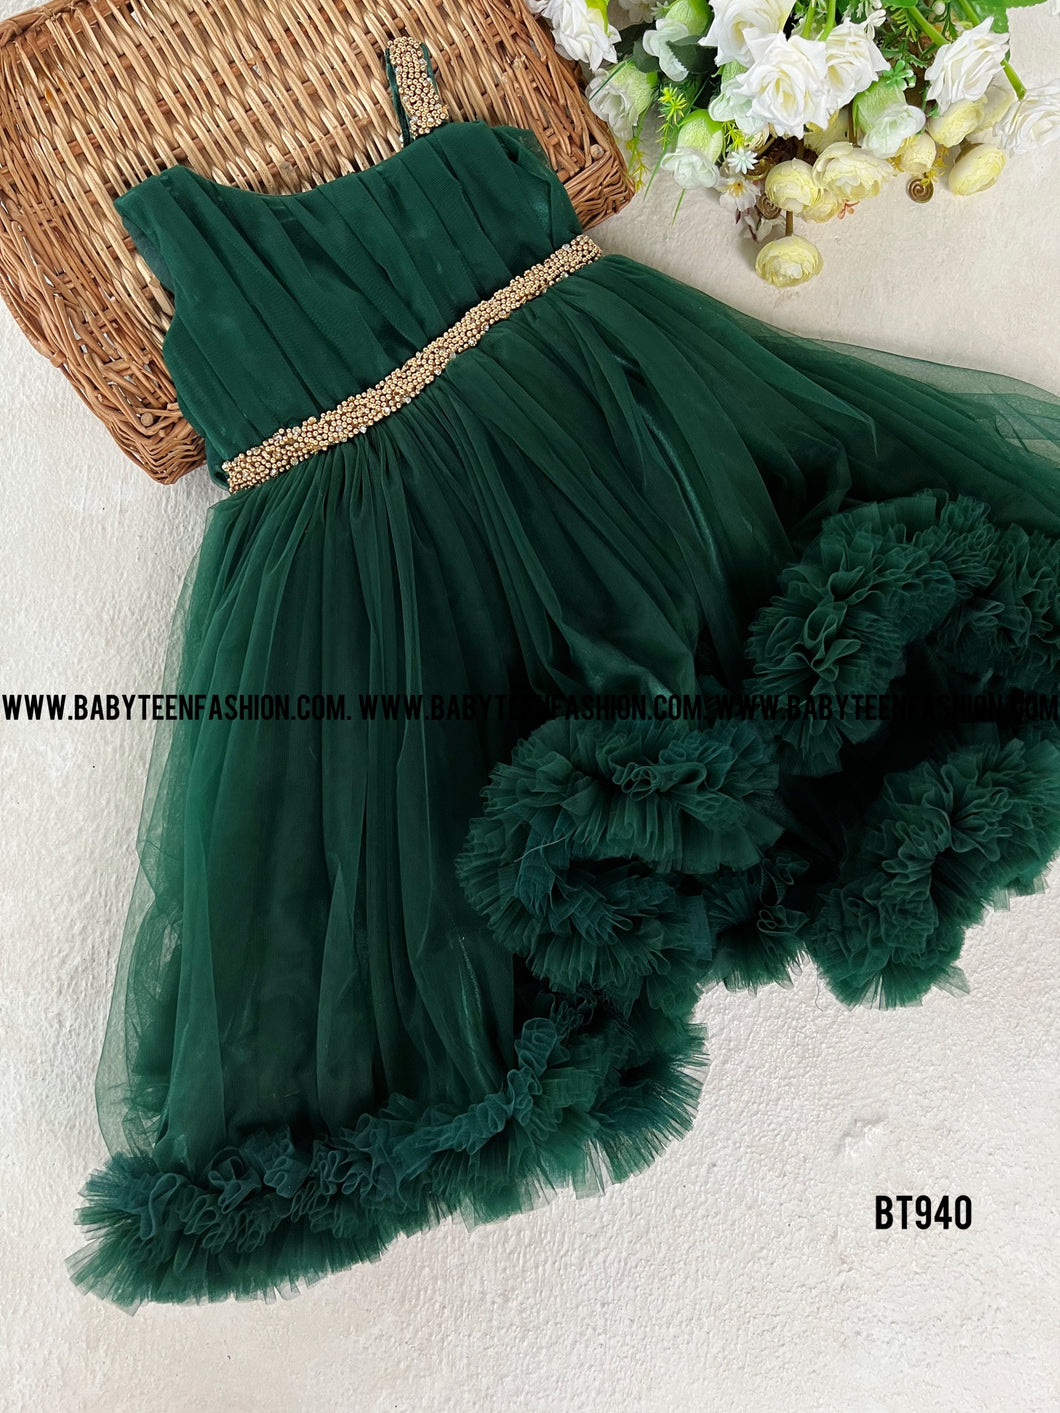 BT940 Emerald Elegance: Enchanting Party Dress for Little Princesses